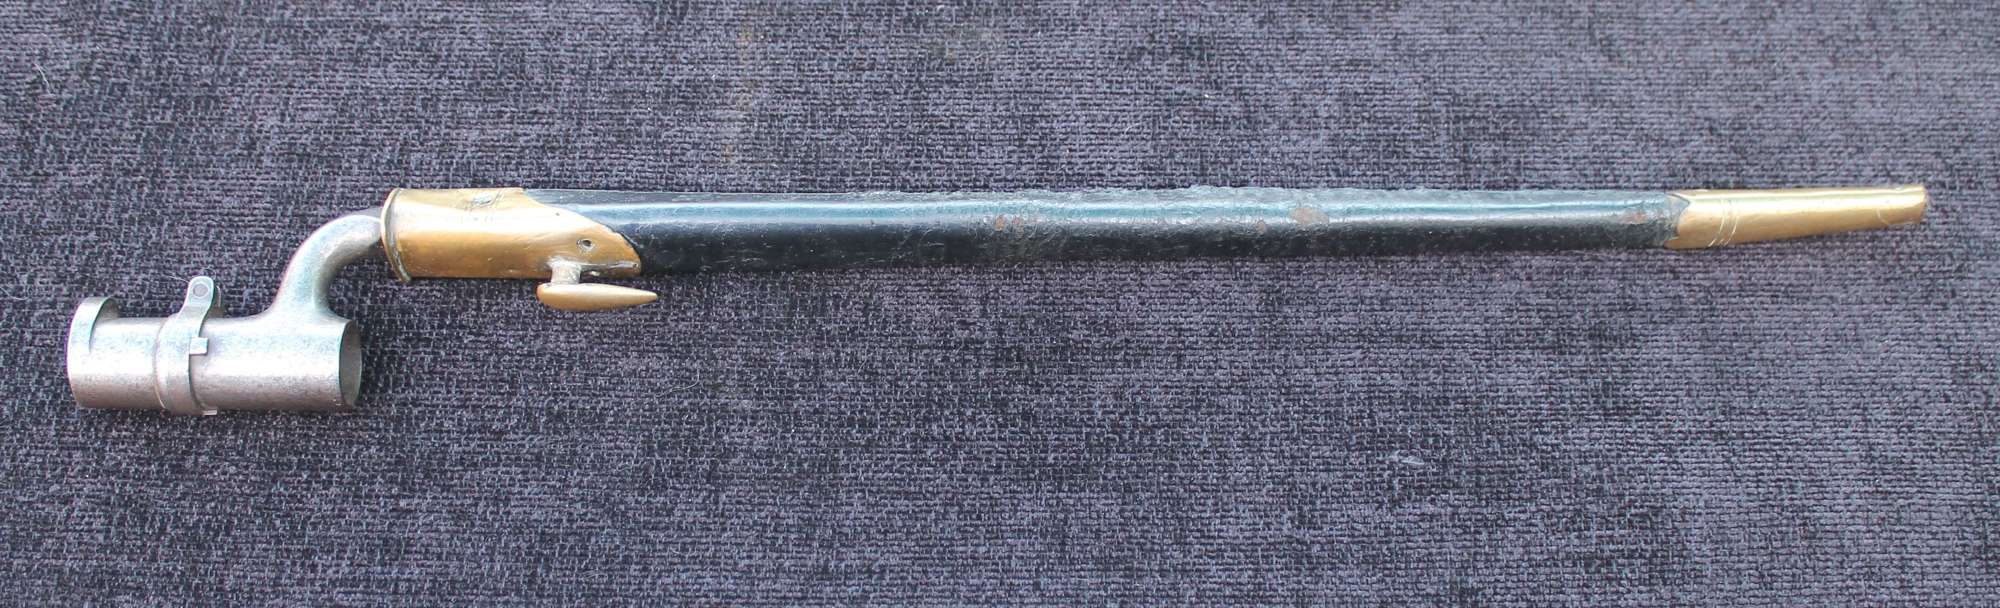 1853 Pattern Socket Bayonet